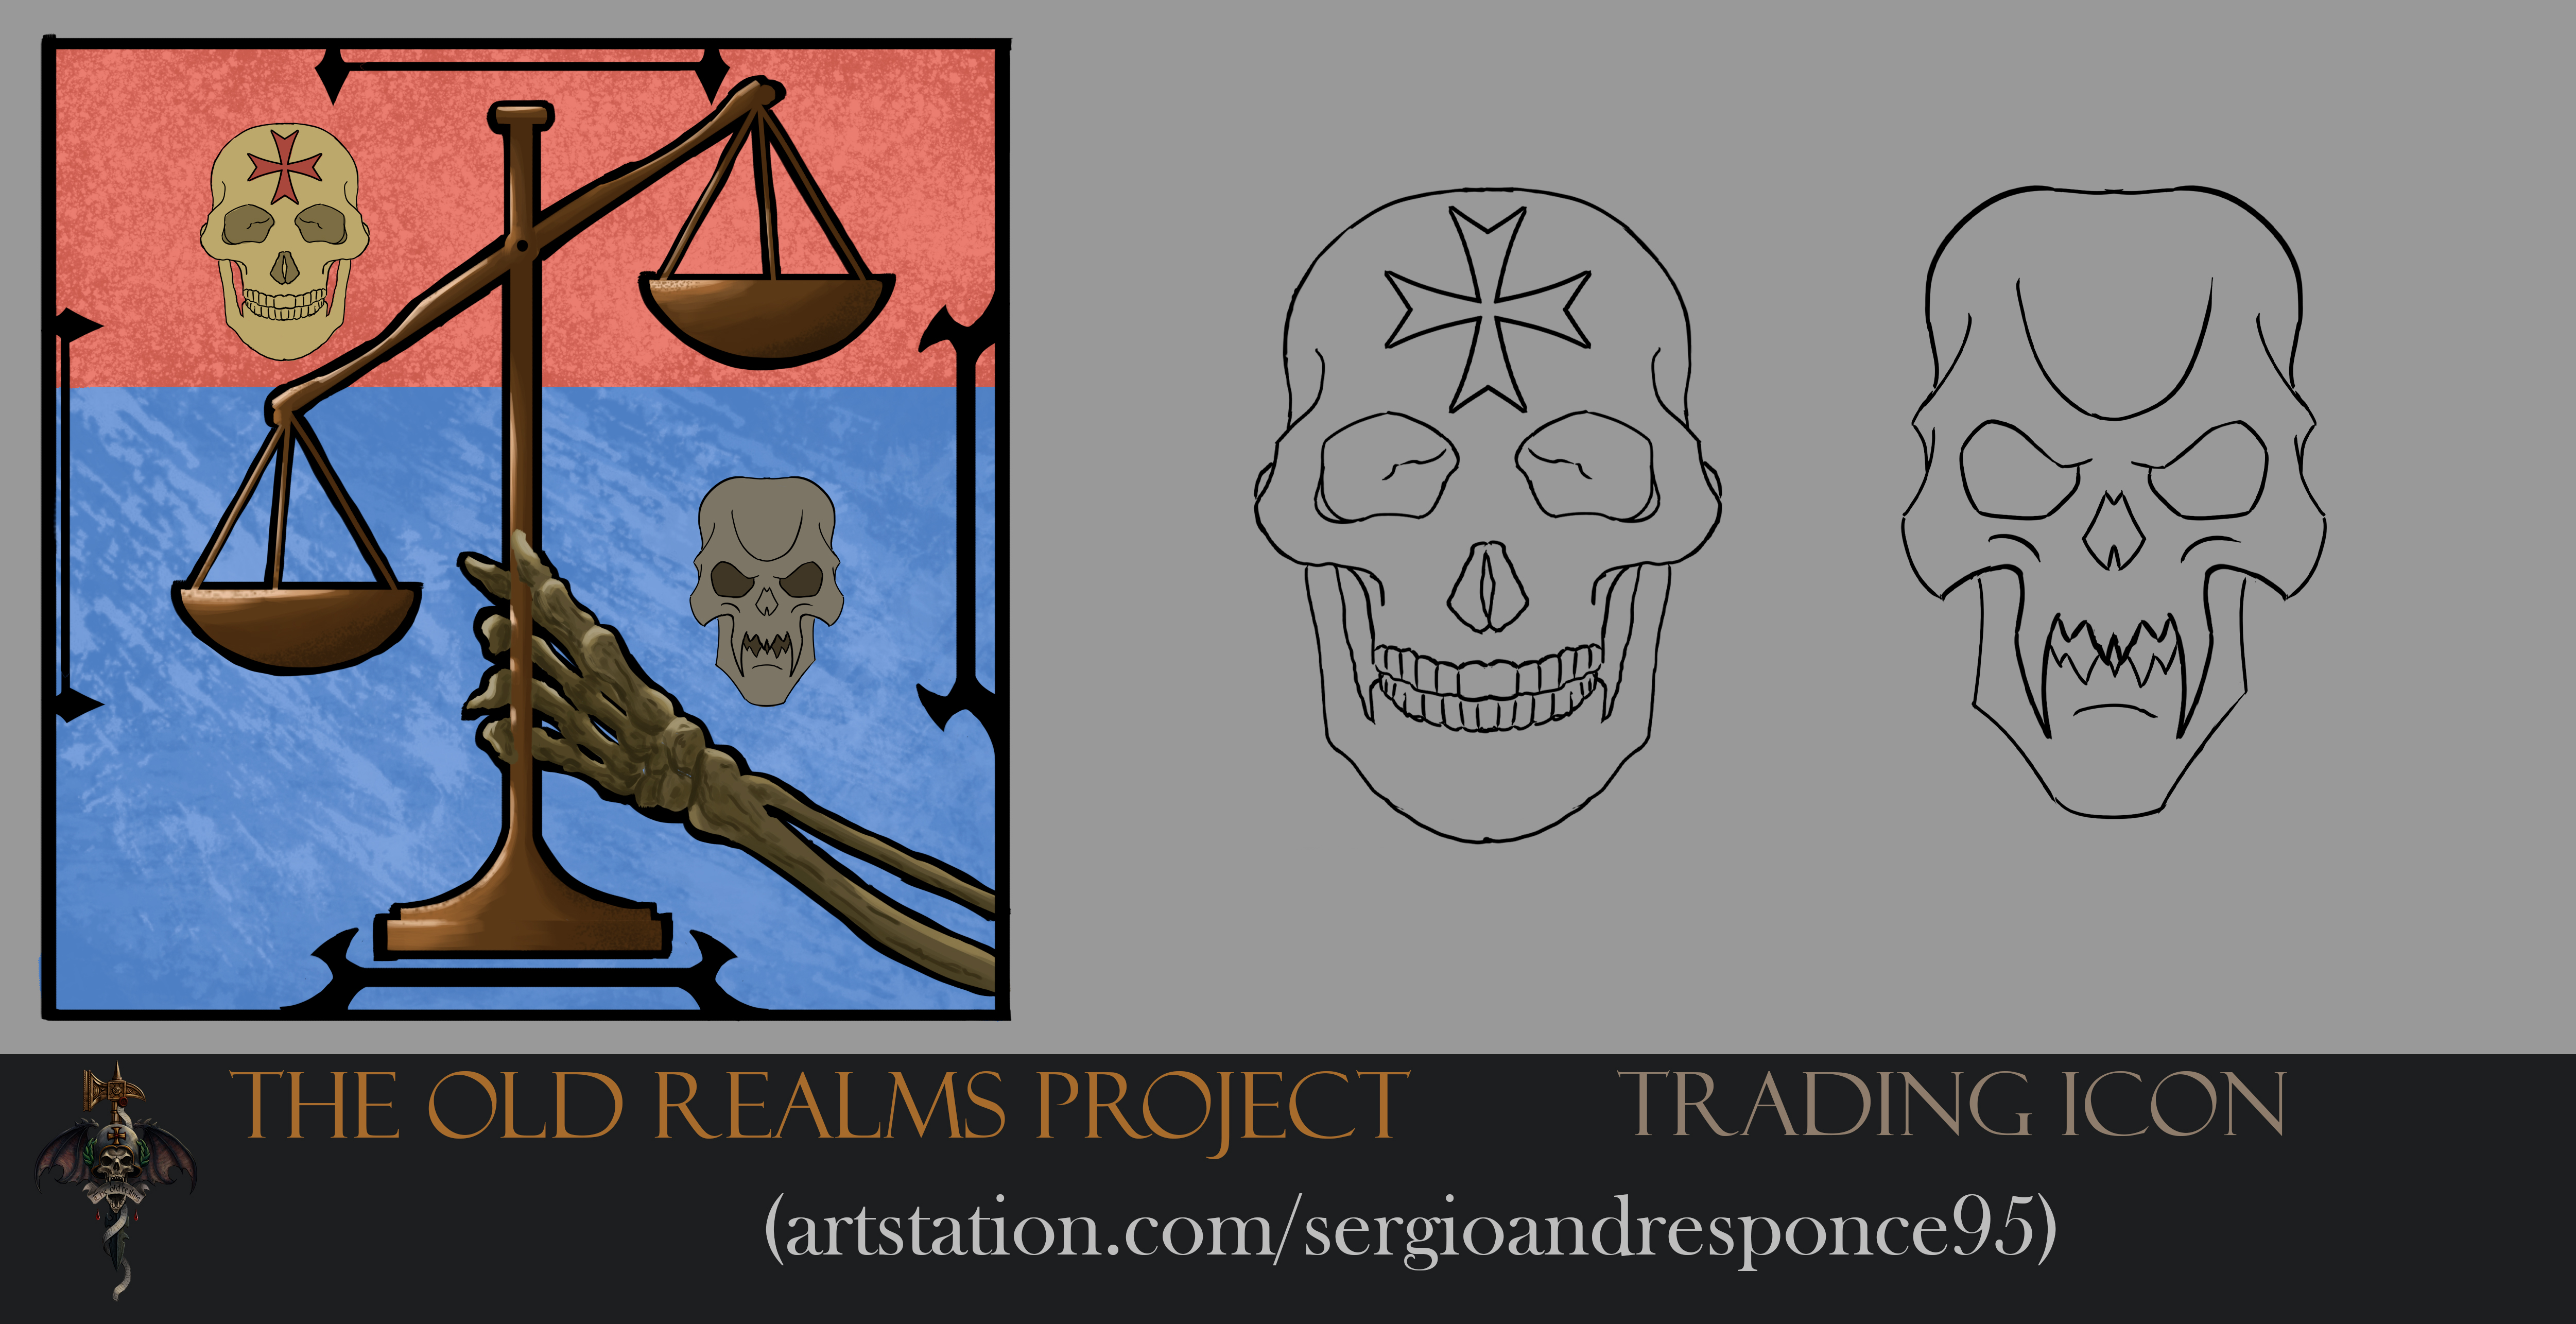 Trading Icon